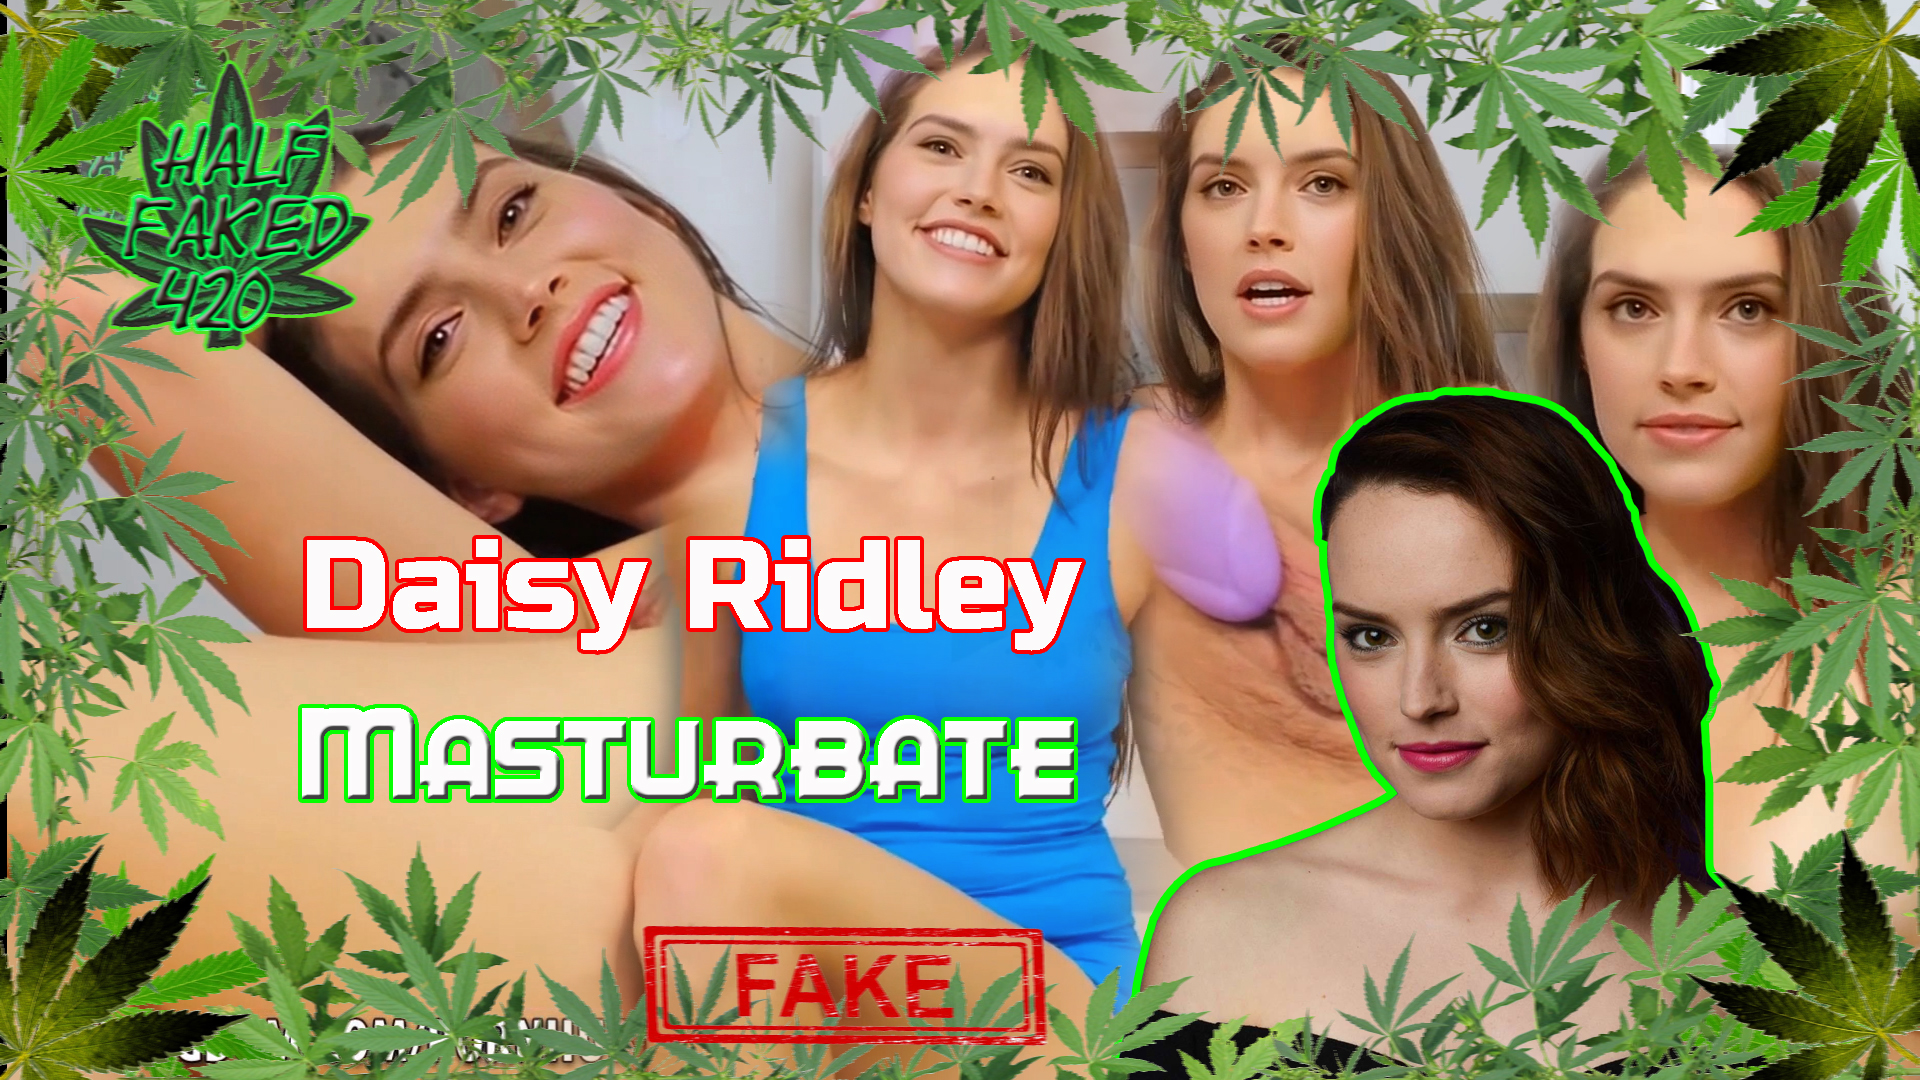 Daisy Ridley - Masturbate with purple vibrator | FAKE